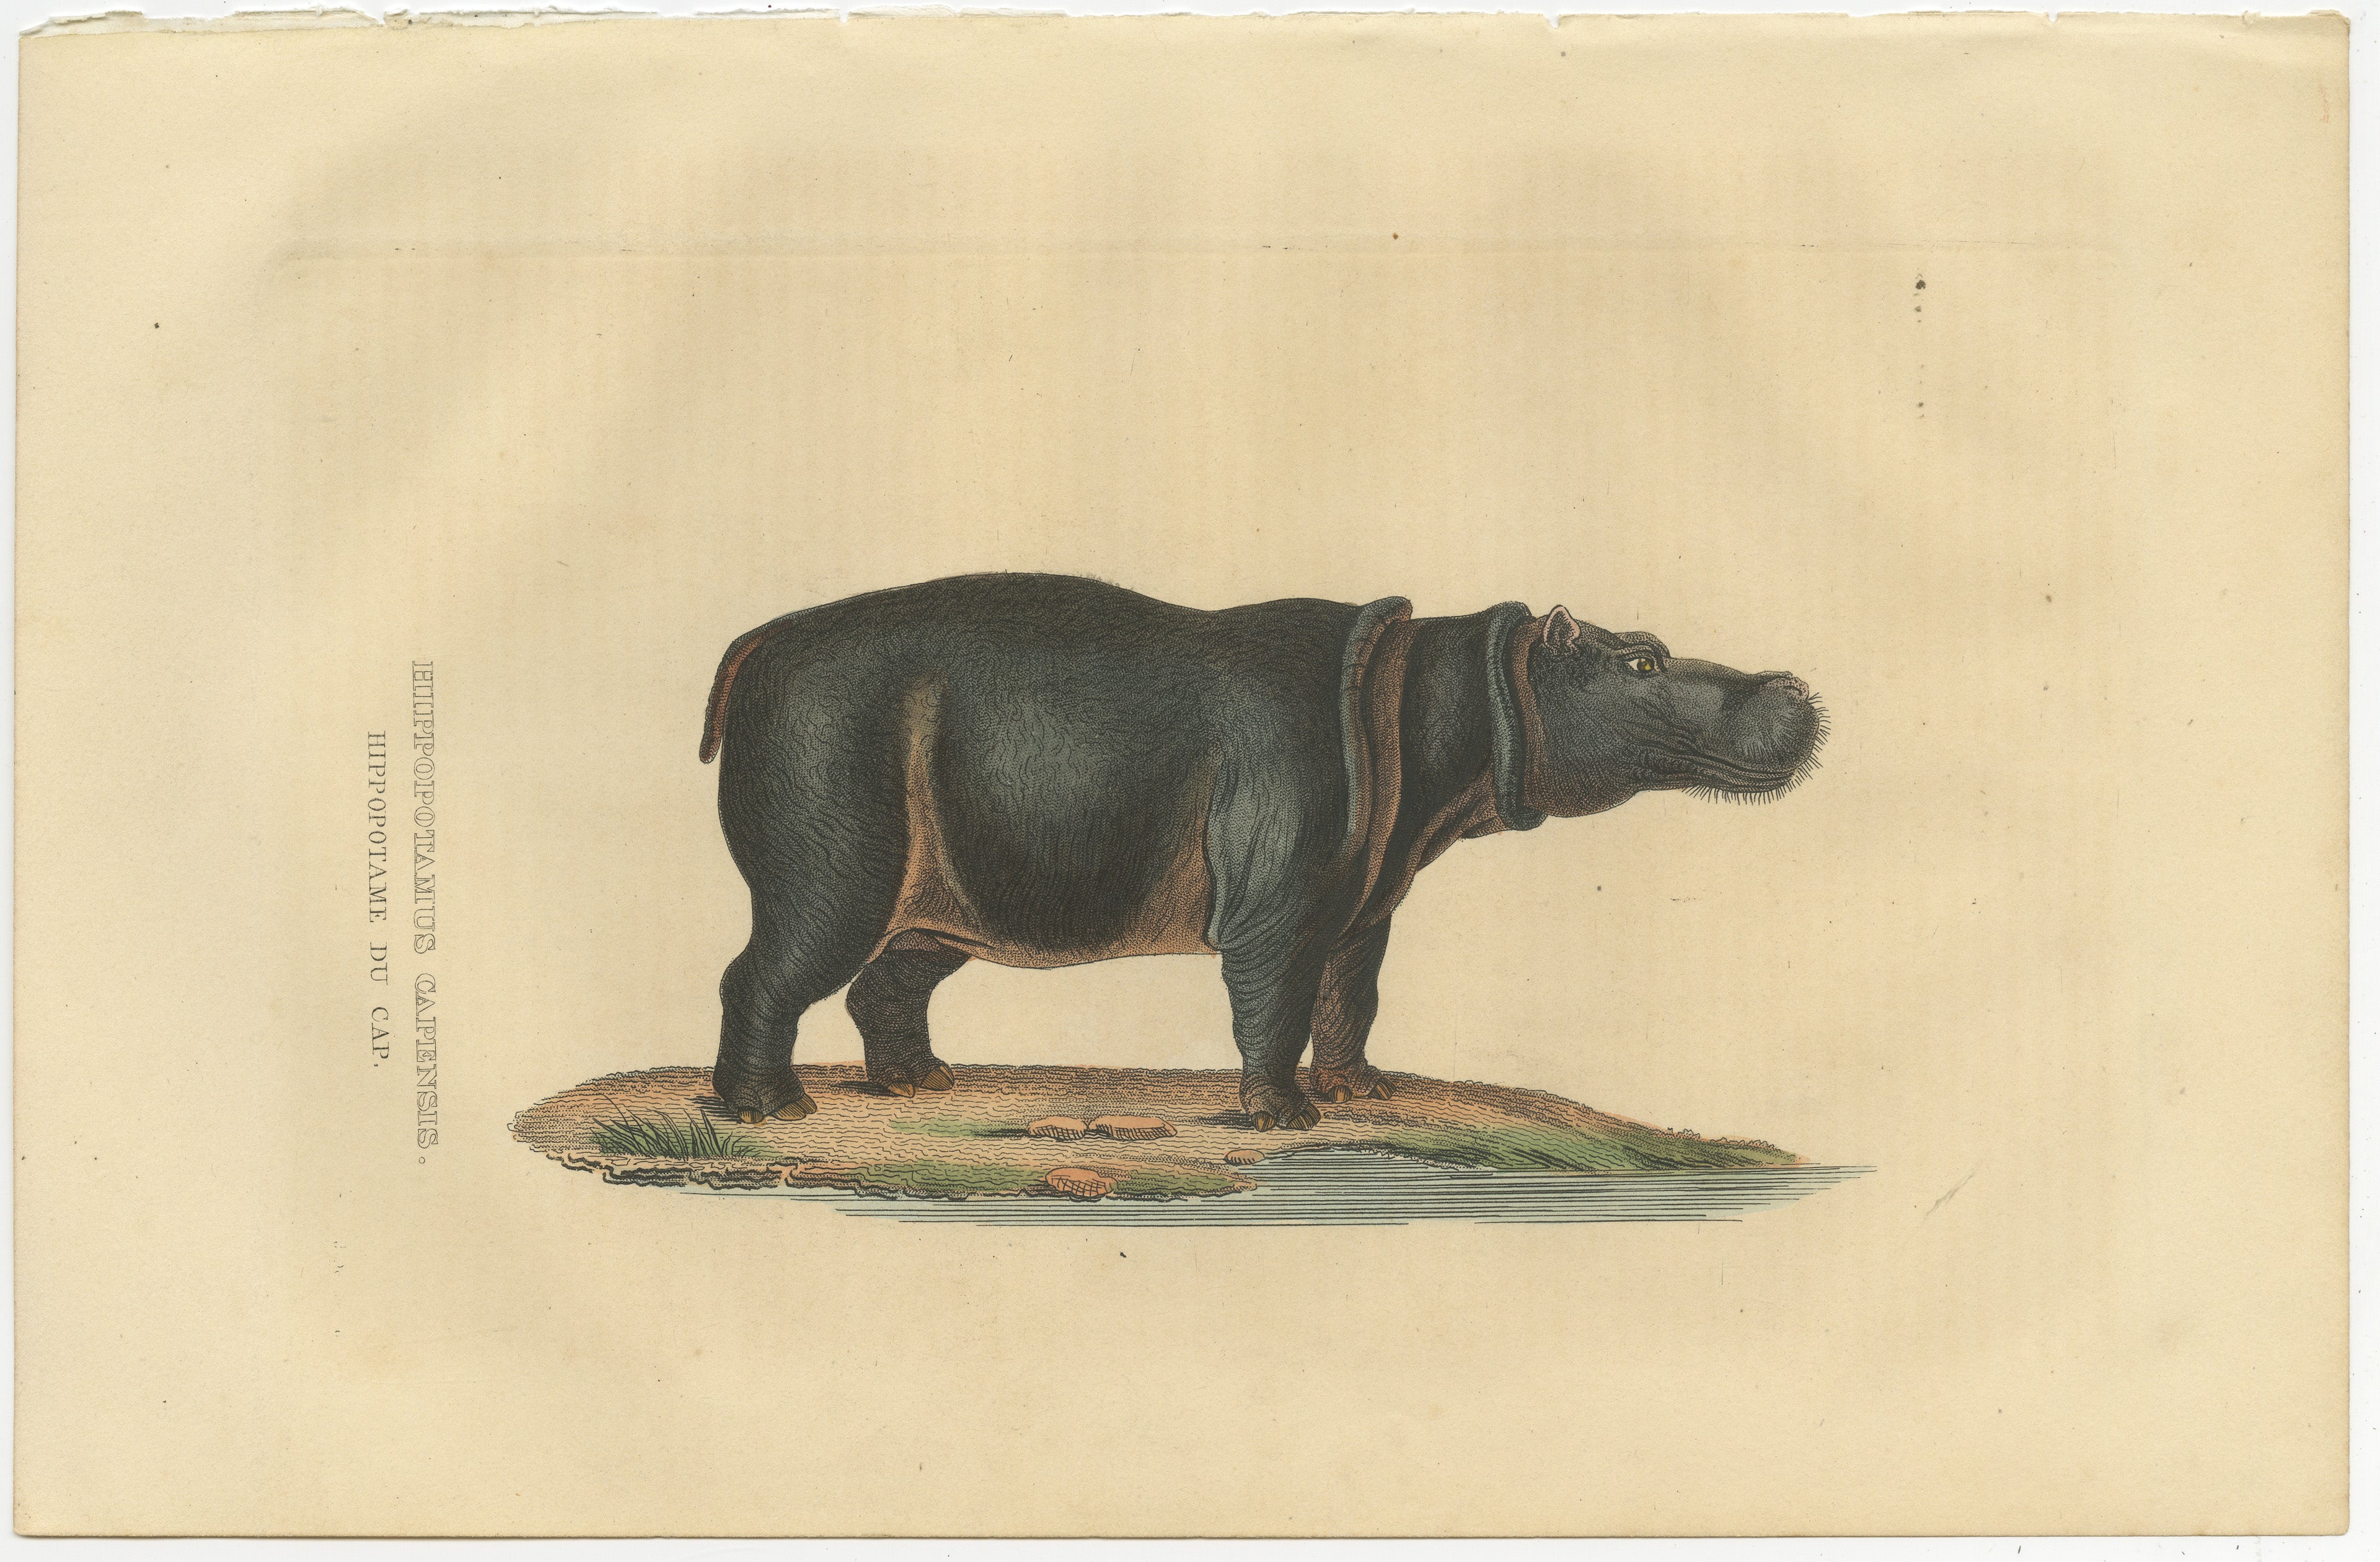 ‘HIPPOPOTAMUS CAPENSIS – HIPPOPOTAME DU CAP.’ ‘
– (Hippo, a large, mostly herbivorous mammal in sub-Saharan Africa.)

The Hippopotamus capensis, commonly known as the Hippopotamus or 